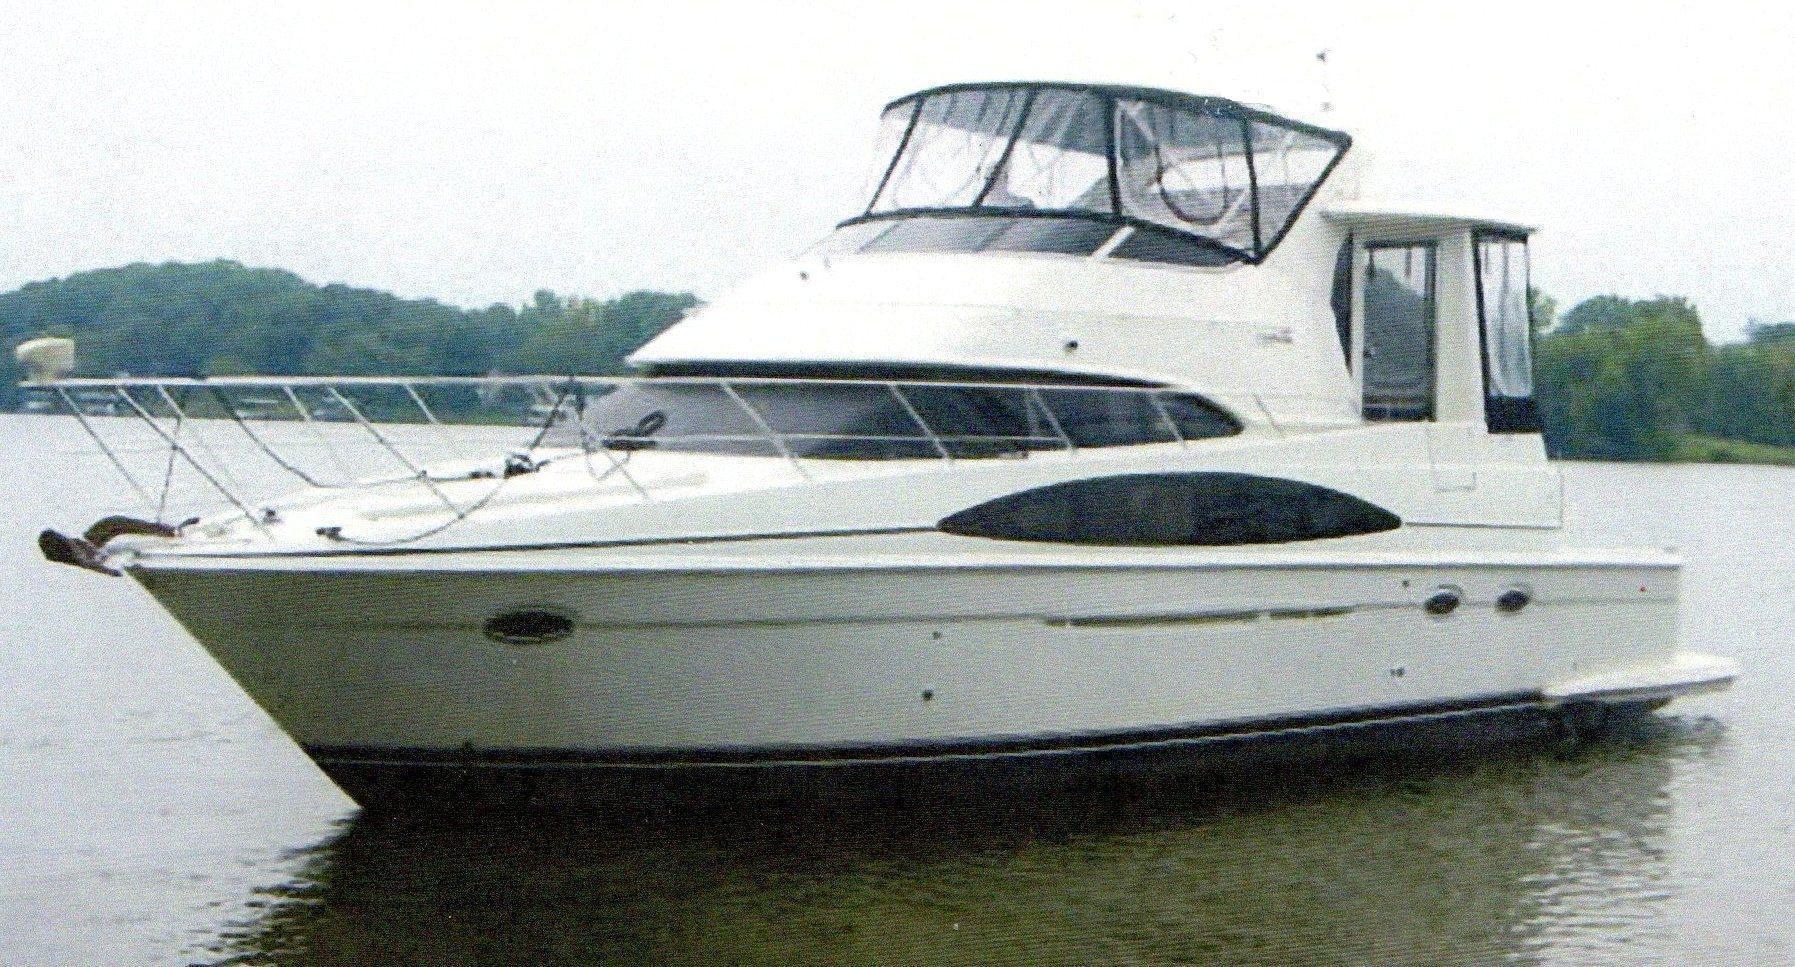 Carver 444 Cockpit Motor Yacht, Seneca